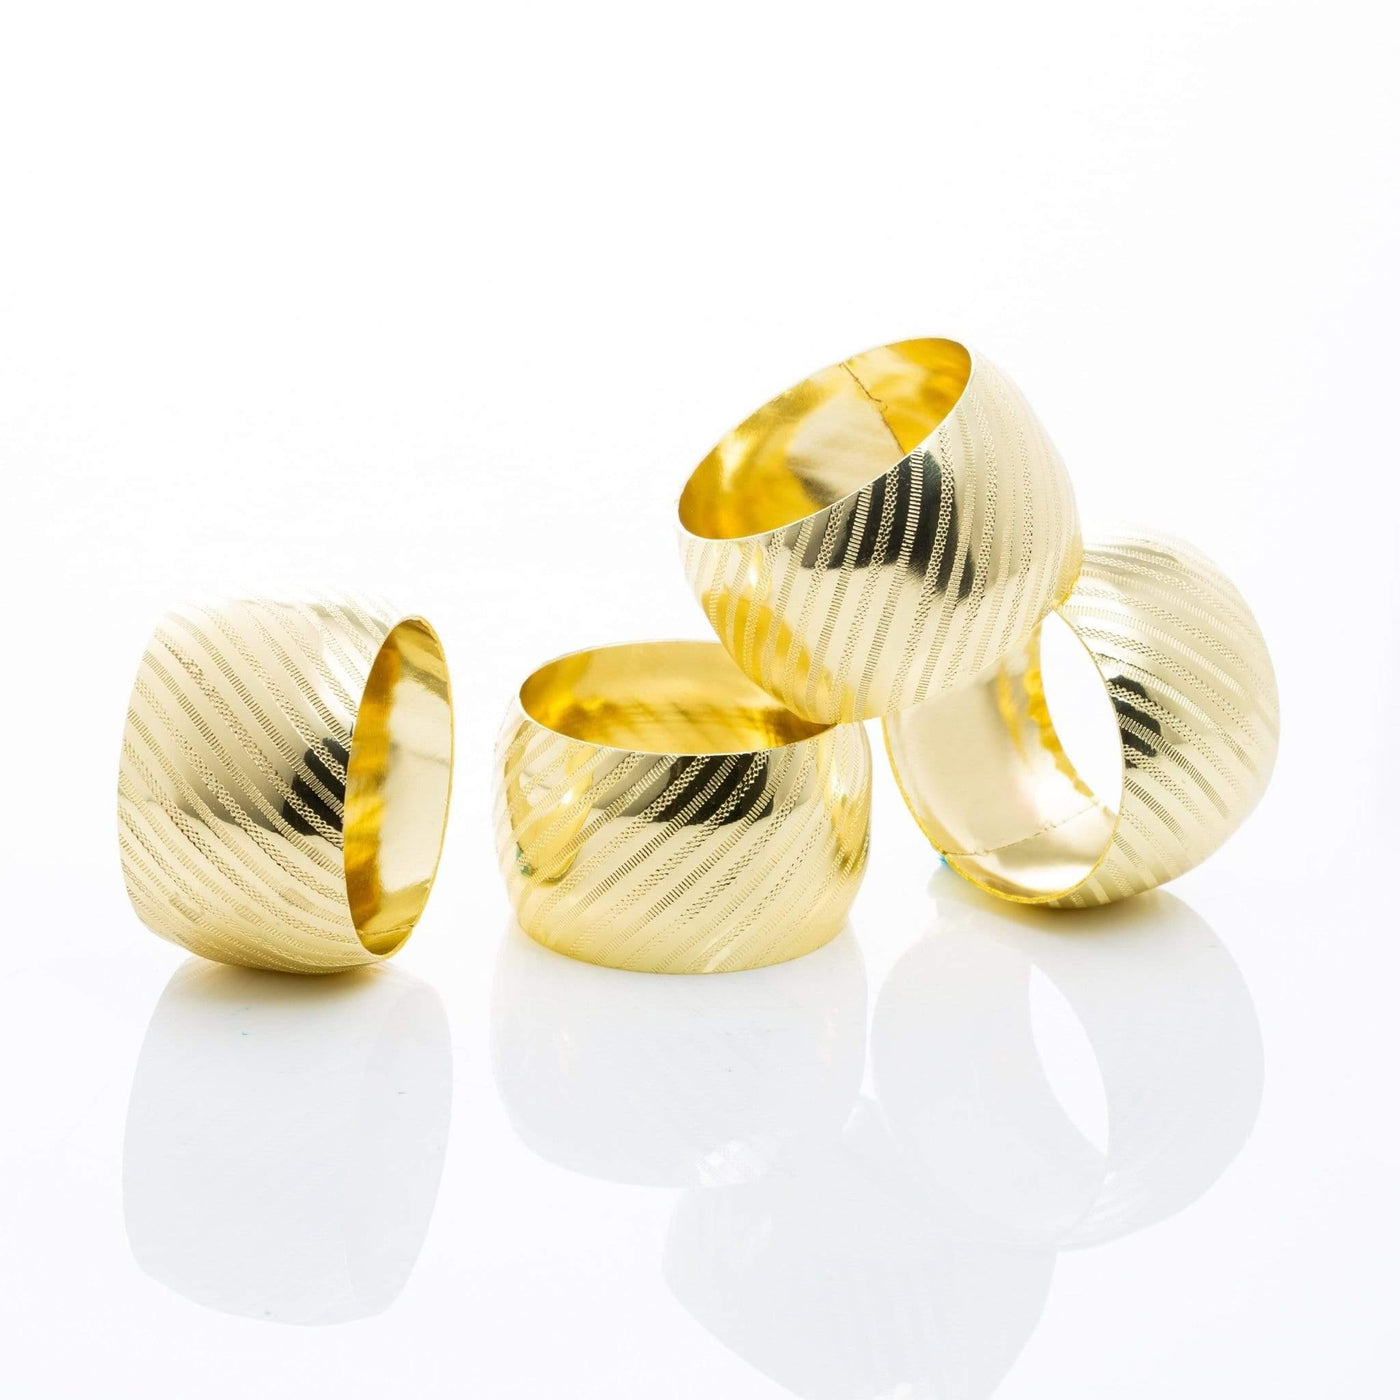 Gold Debossed Metal Napkin Rings | 4 Napkin Rings - Set With Style